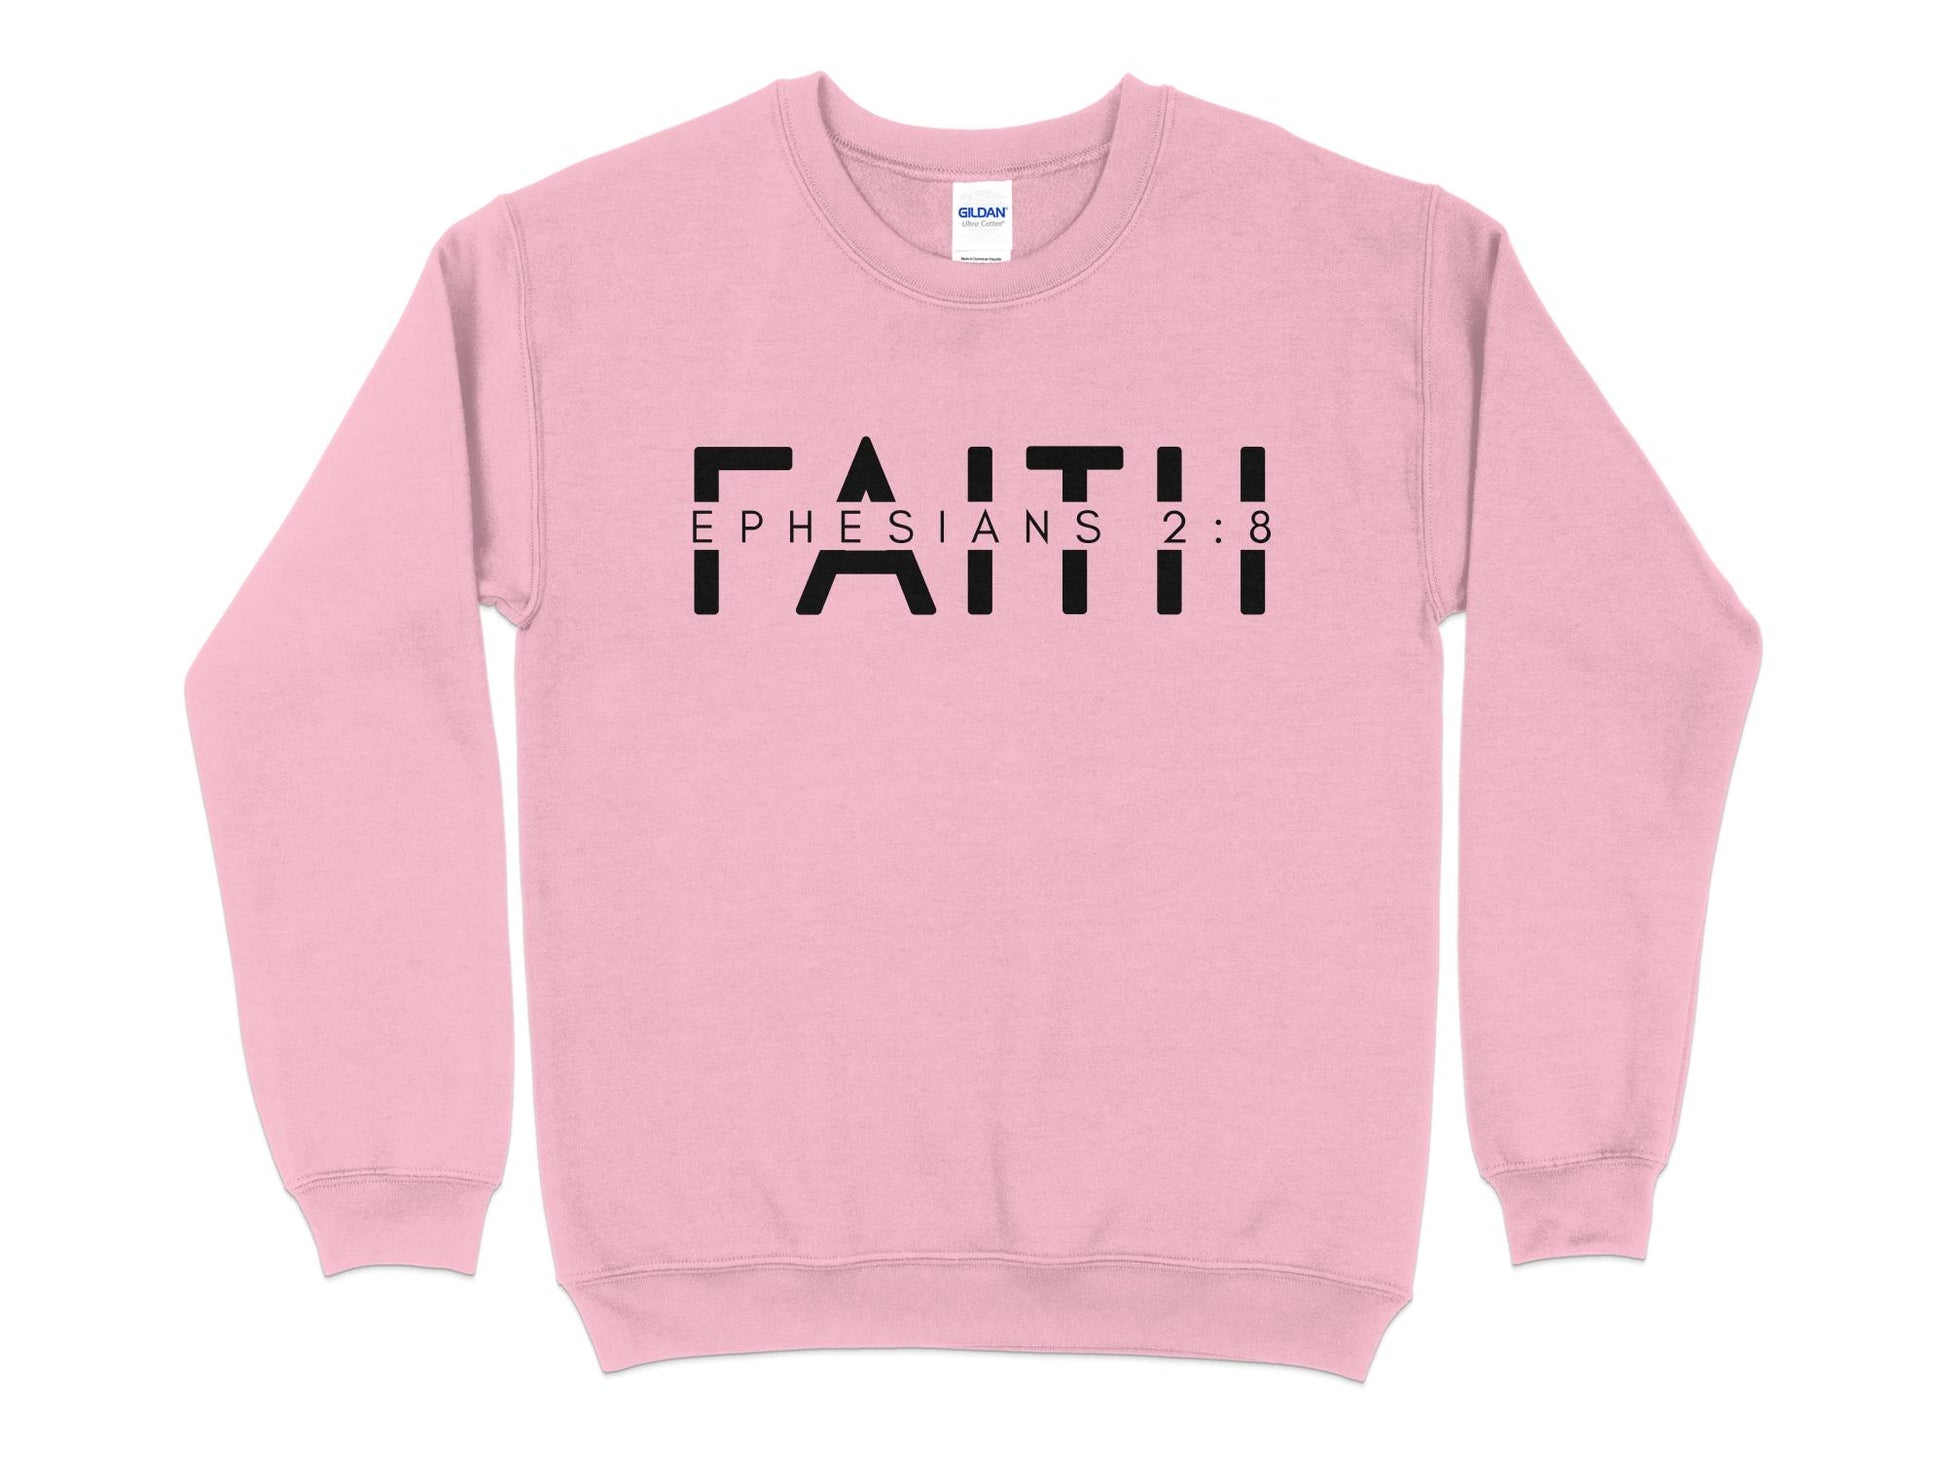 Unisex Faith Ephesians 2:8 Sweatshirt, Bible Verse Christian Pullover, Religious Scripture Soft Cotton Sweater, Casual Wear - Mardonyx Sweatshirt S / Light Pink